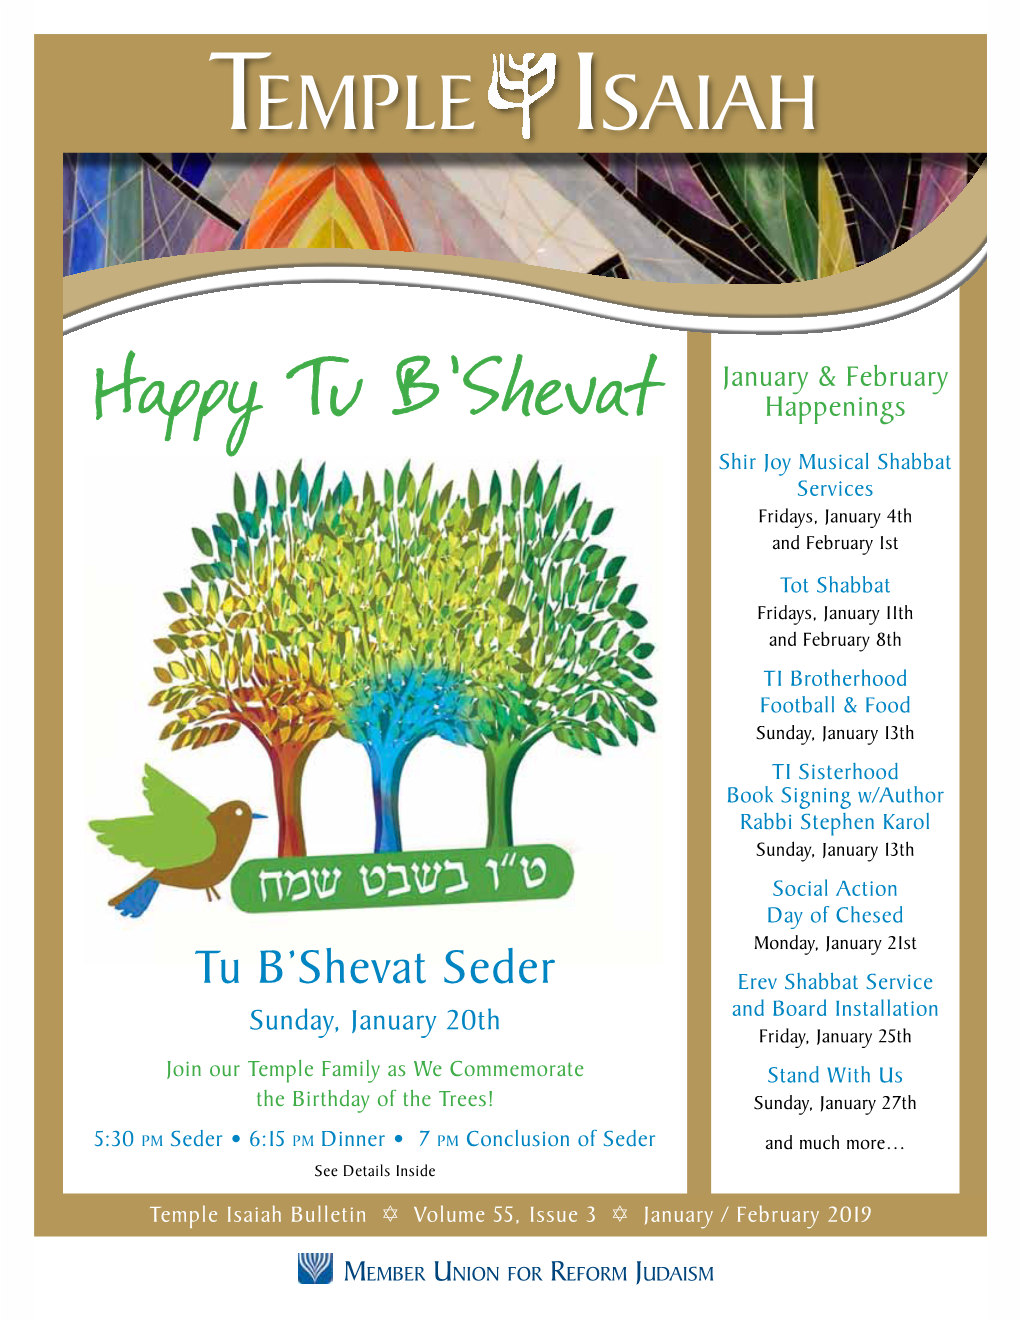 Tu B'shevat Seder